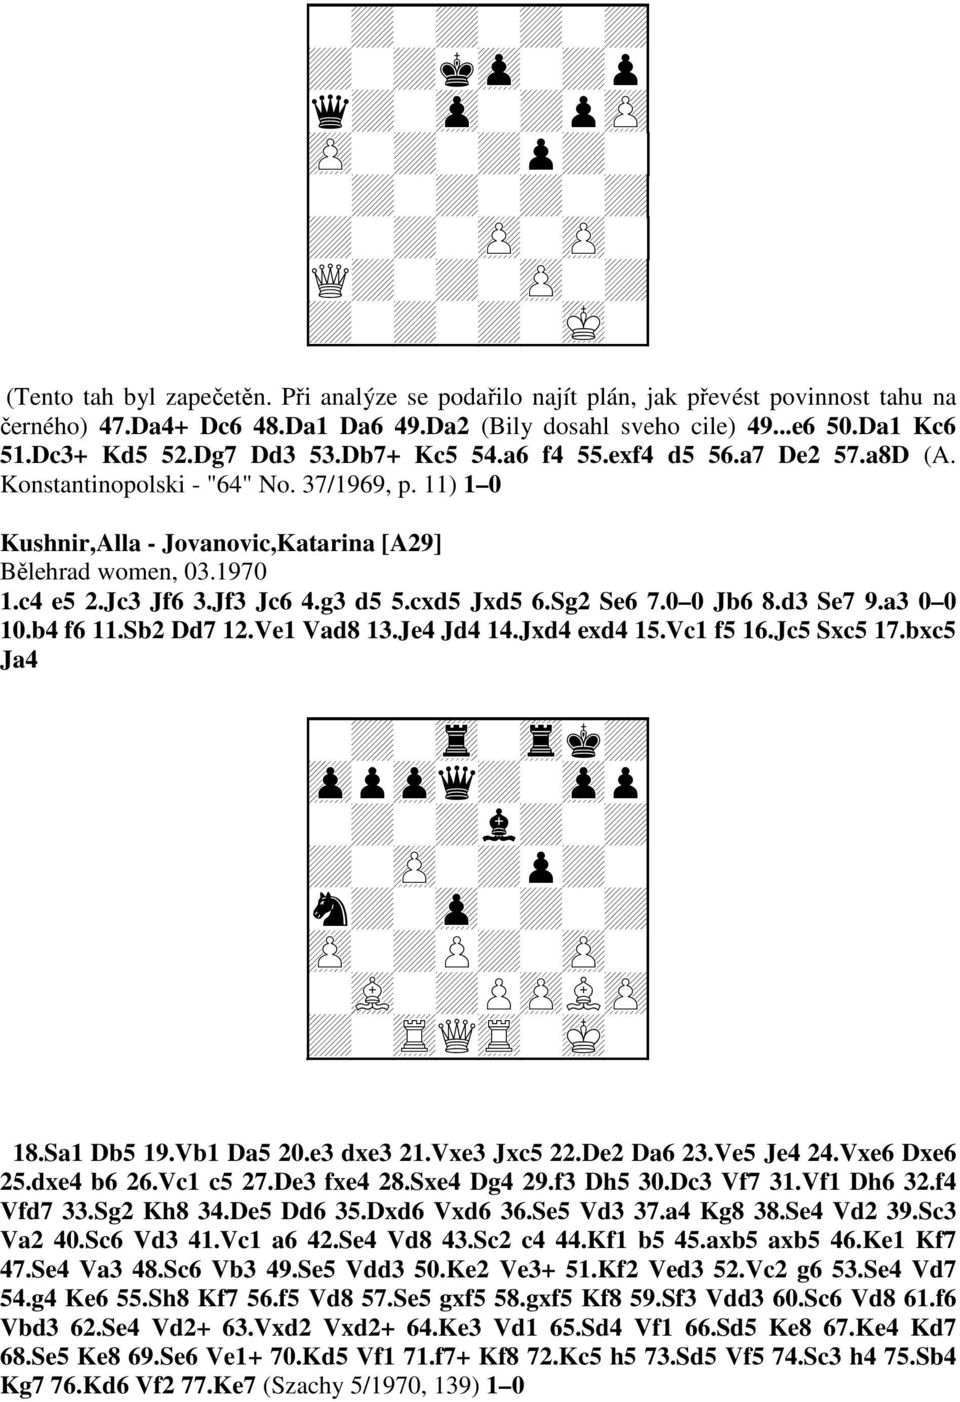 c4 e5 2.Jc3 Jf6 3.Jf3 Jc6 4.g3 d5 5.cxd5 Jxd5 6.Sg2 Se6 7.0 0 Jb6 8.d3 Se7 9.a3 0 0 10.b4 f6 11.Sb2 Dd7 12.Ve1 Vad8 13.Je4 Jd4 14.Jxd4 exd4 15.Vc1 f5 16.Jc5 Sxc5 17.